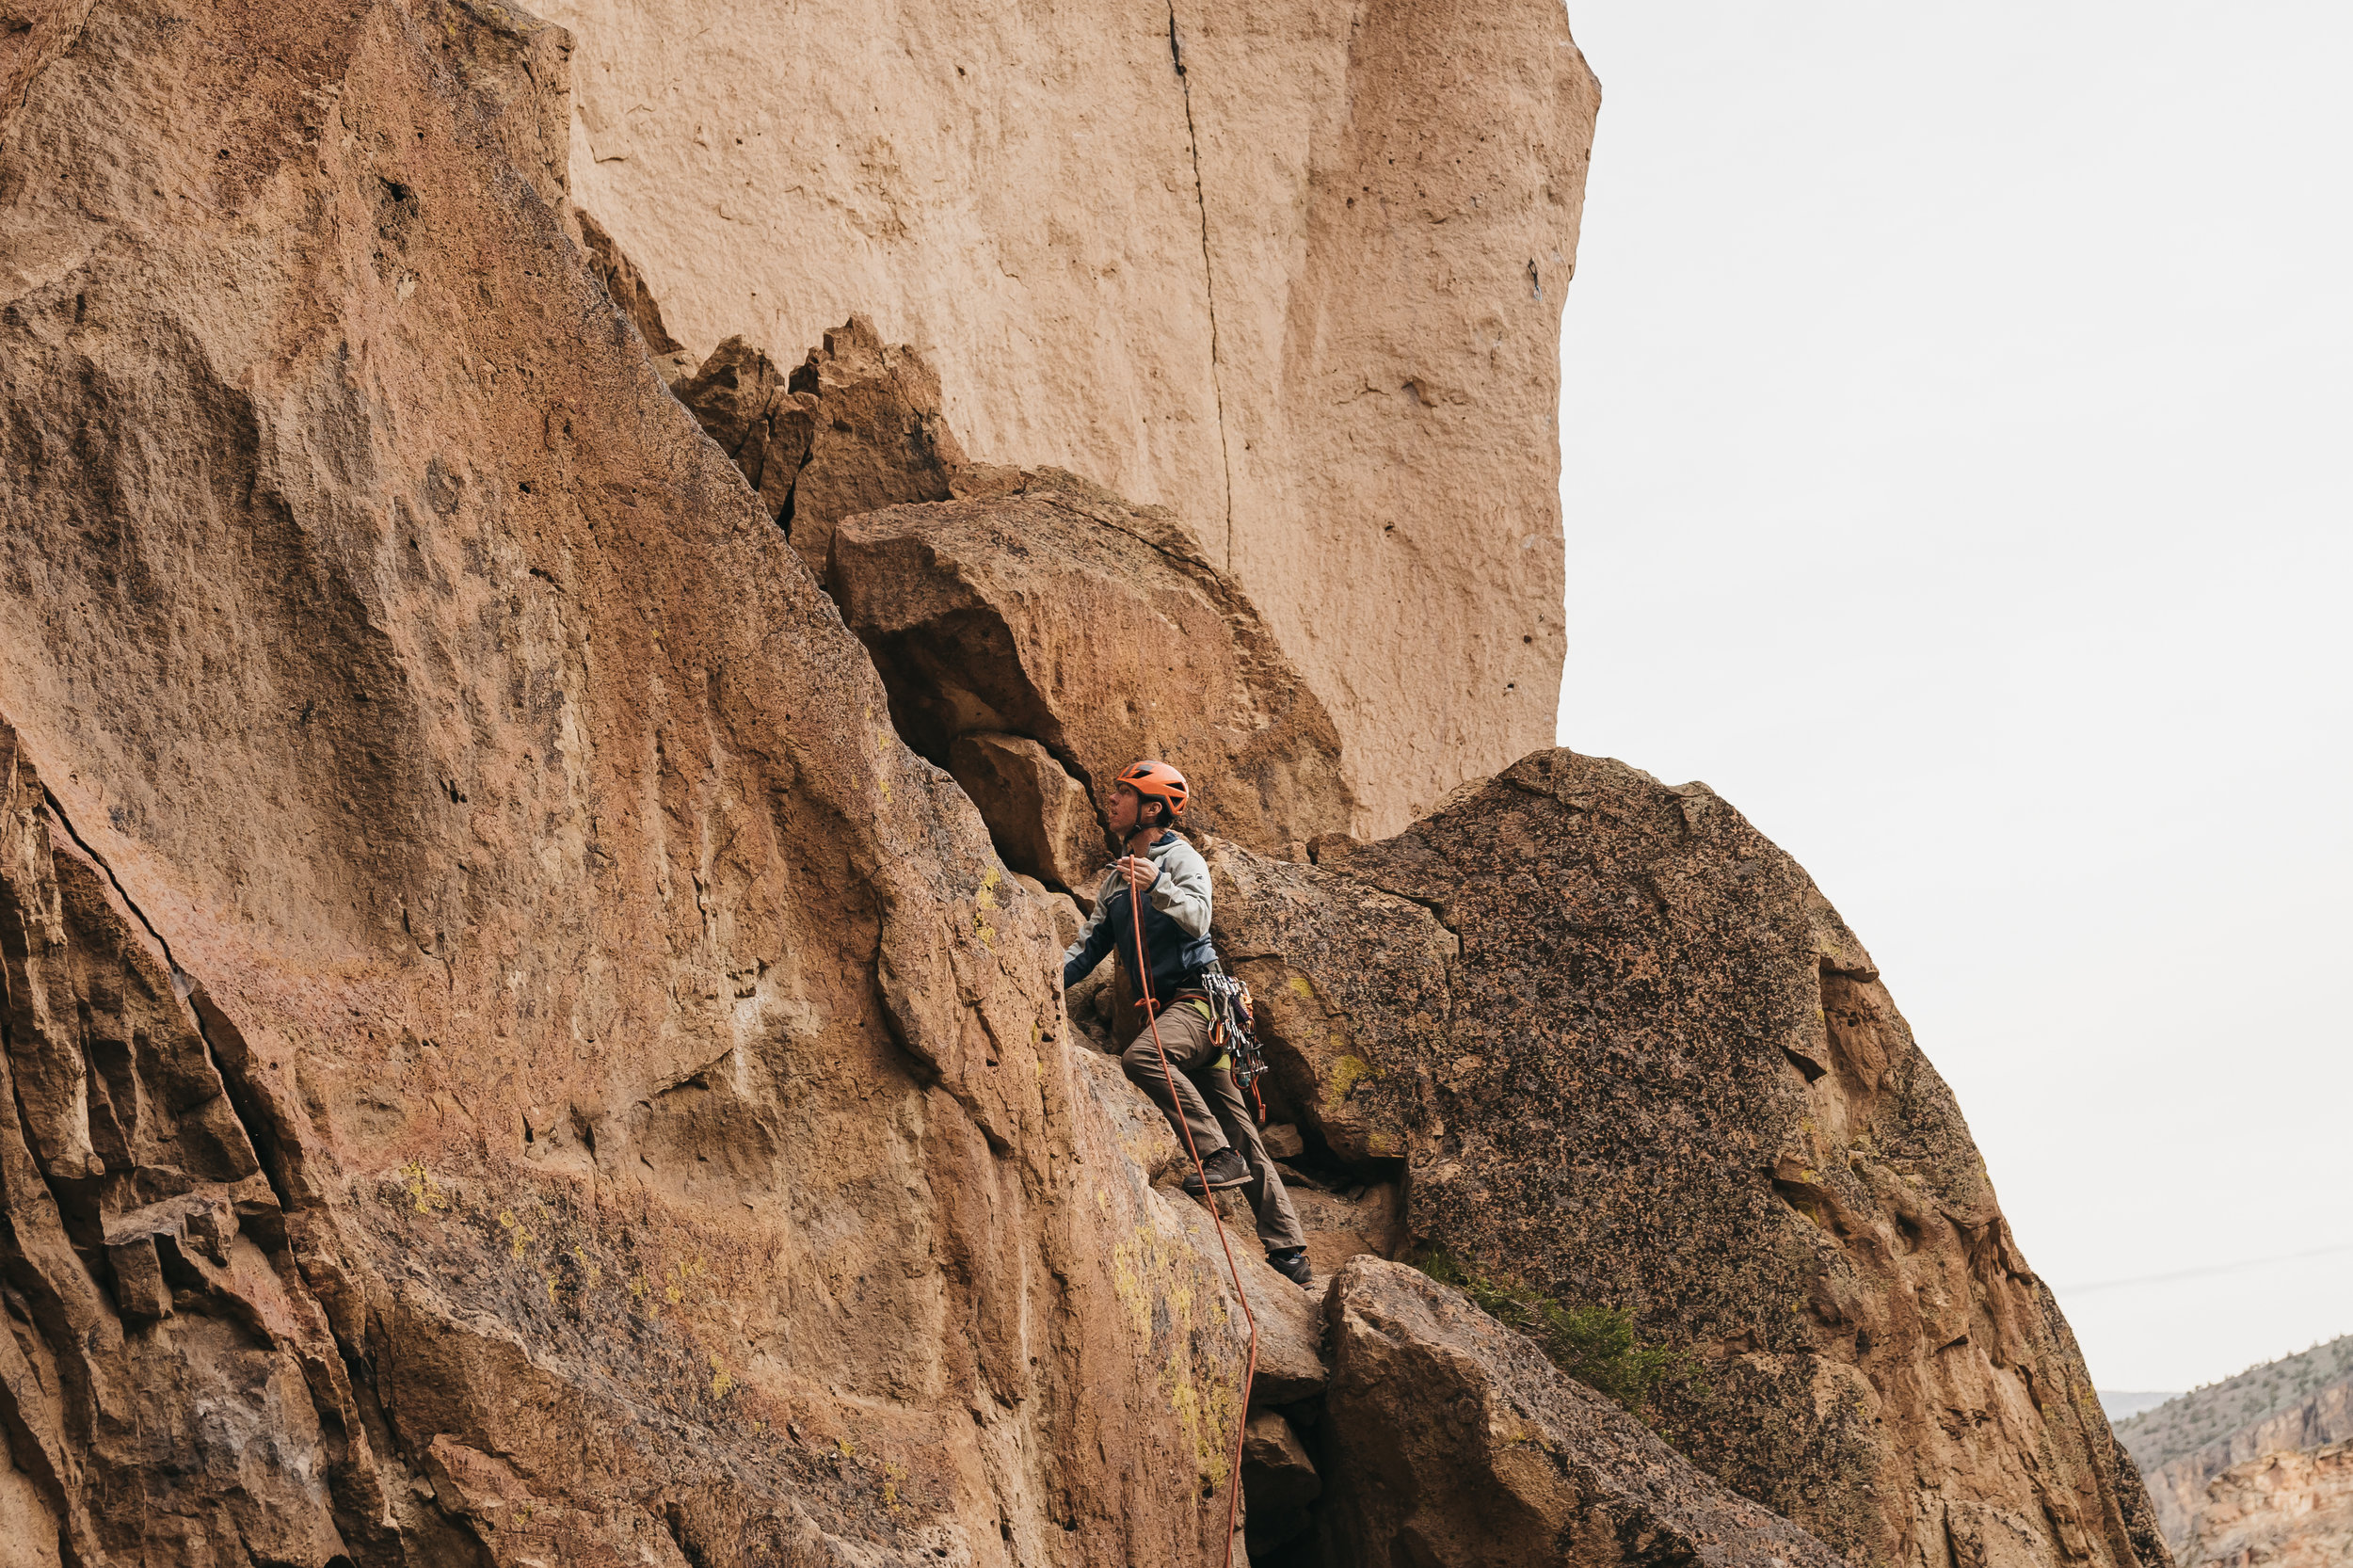 Smith Rock Rock Climbing Elopement | Between the Pine Adventure Elopement Photography 